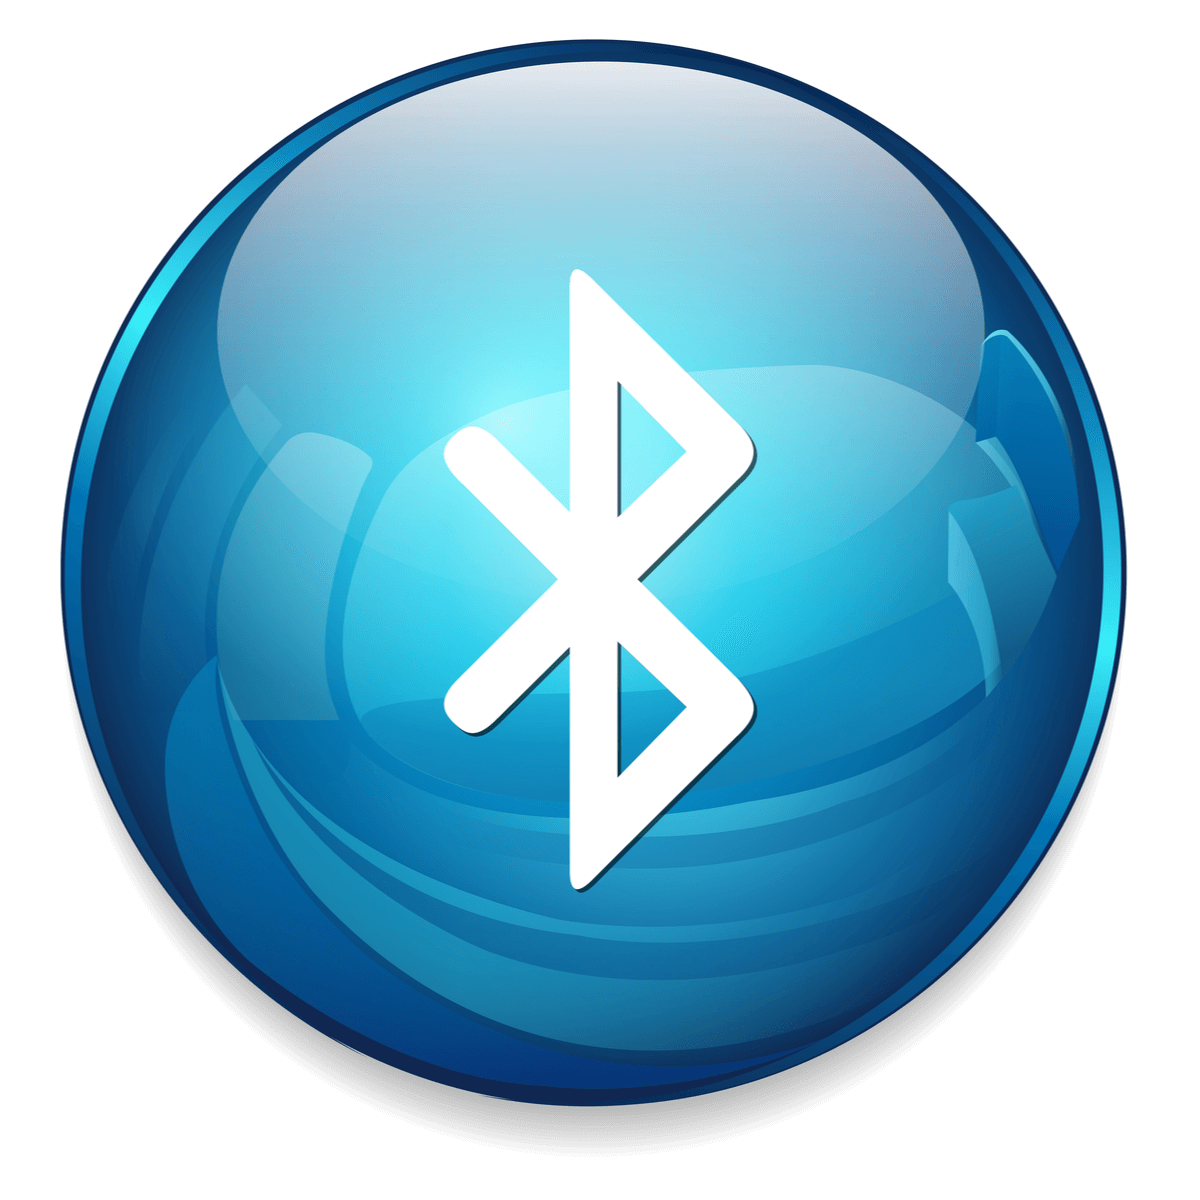 FIX: Error establishing connection with Bluetooth